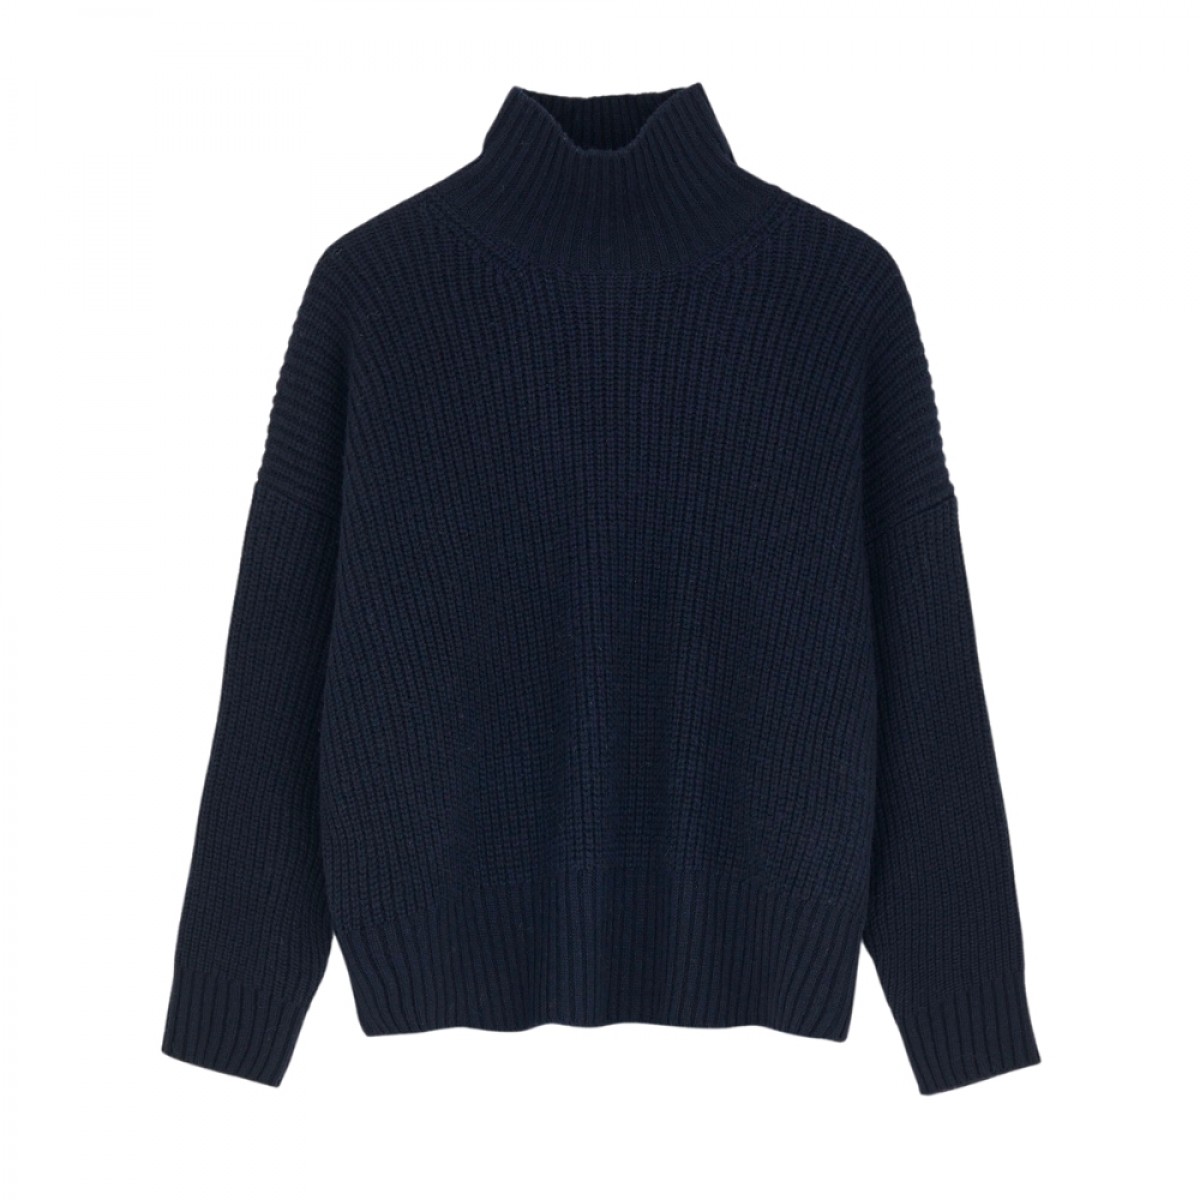 hera sweater - black blue - front